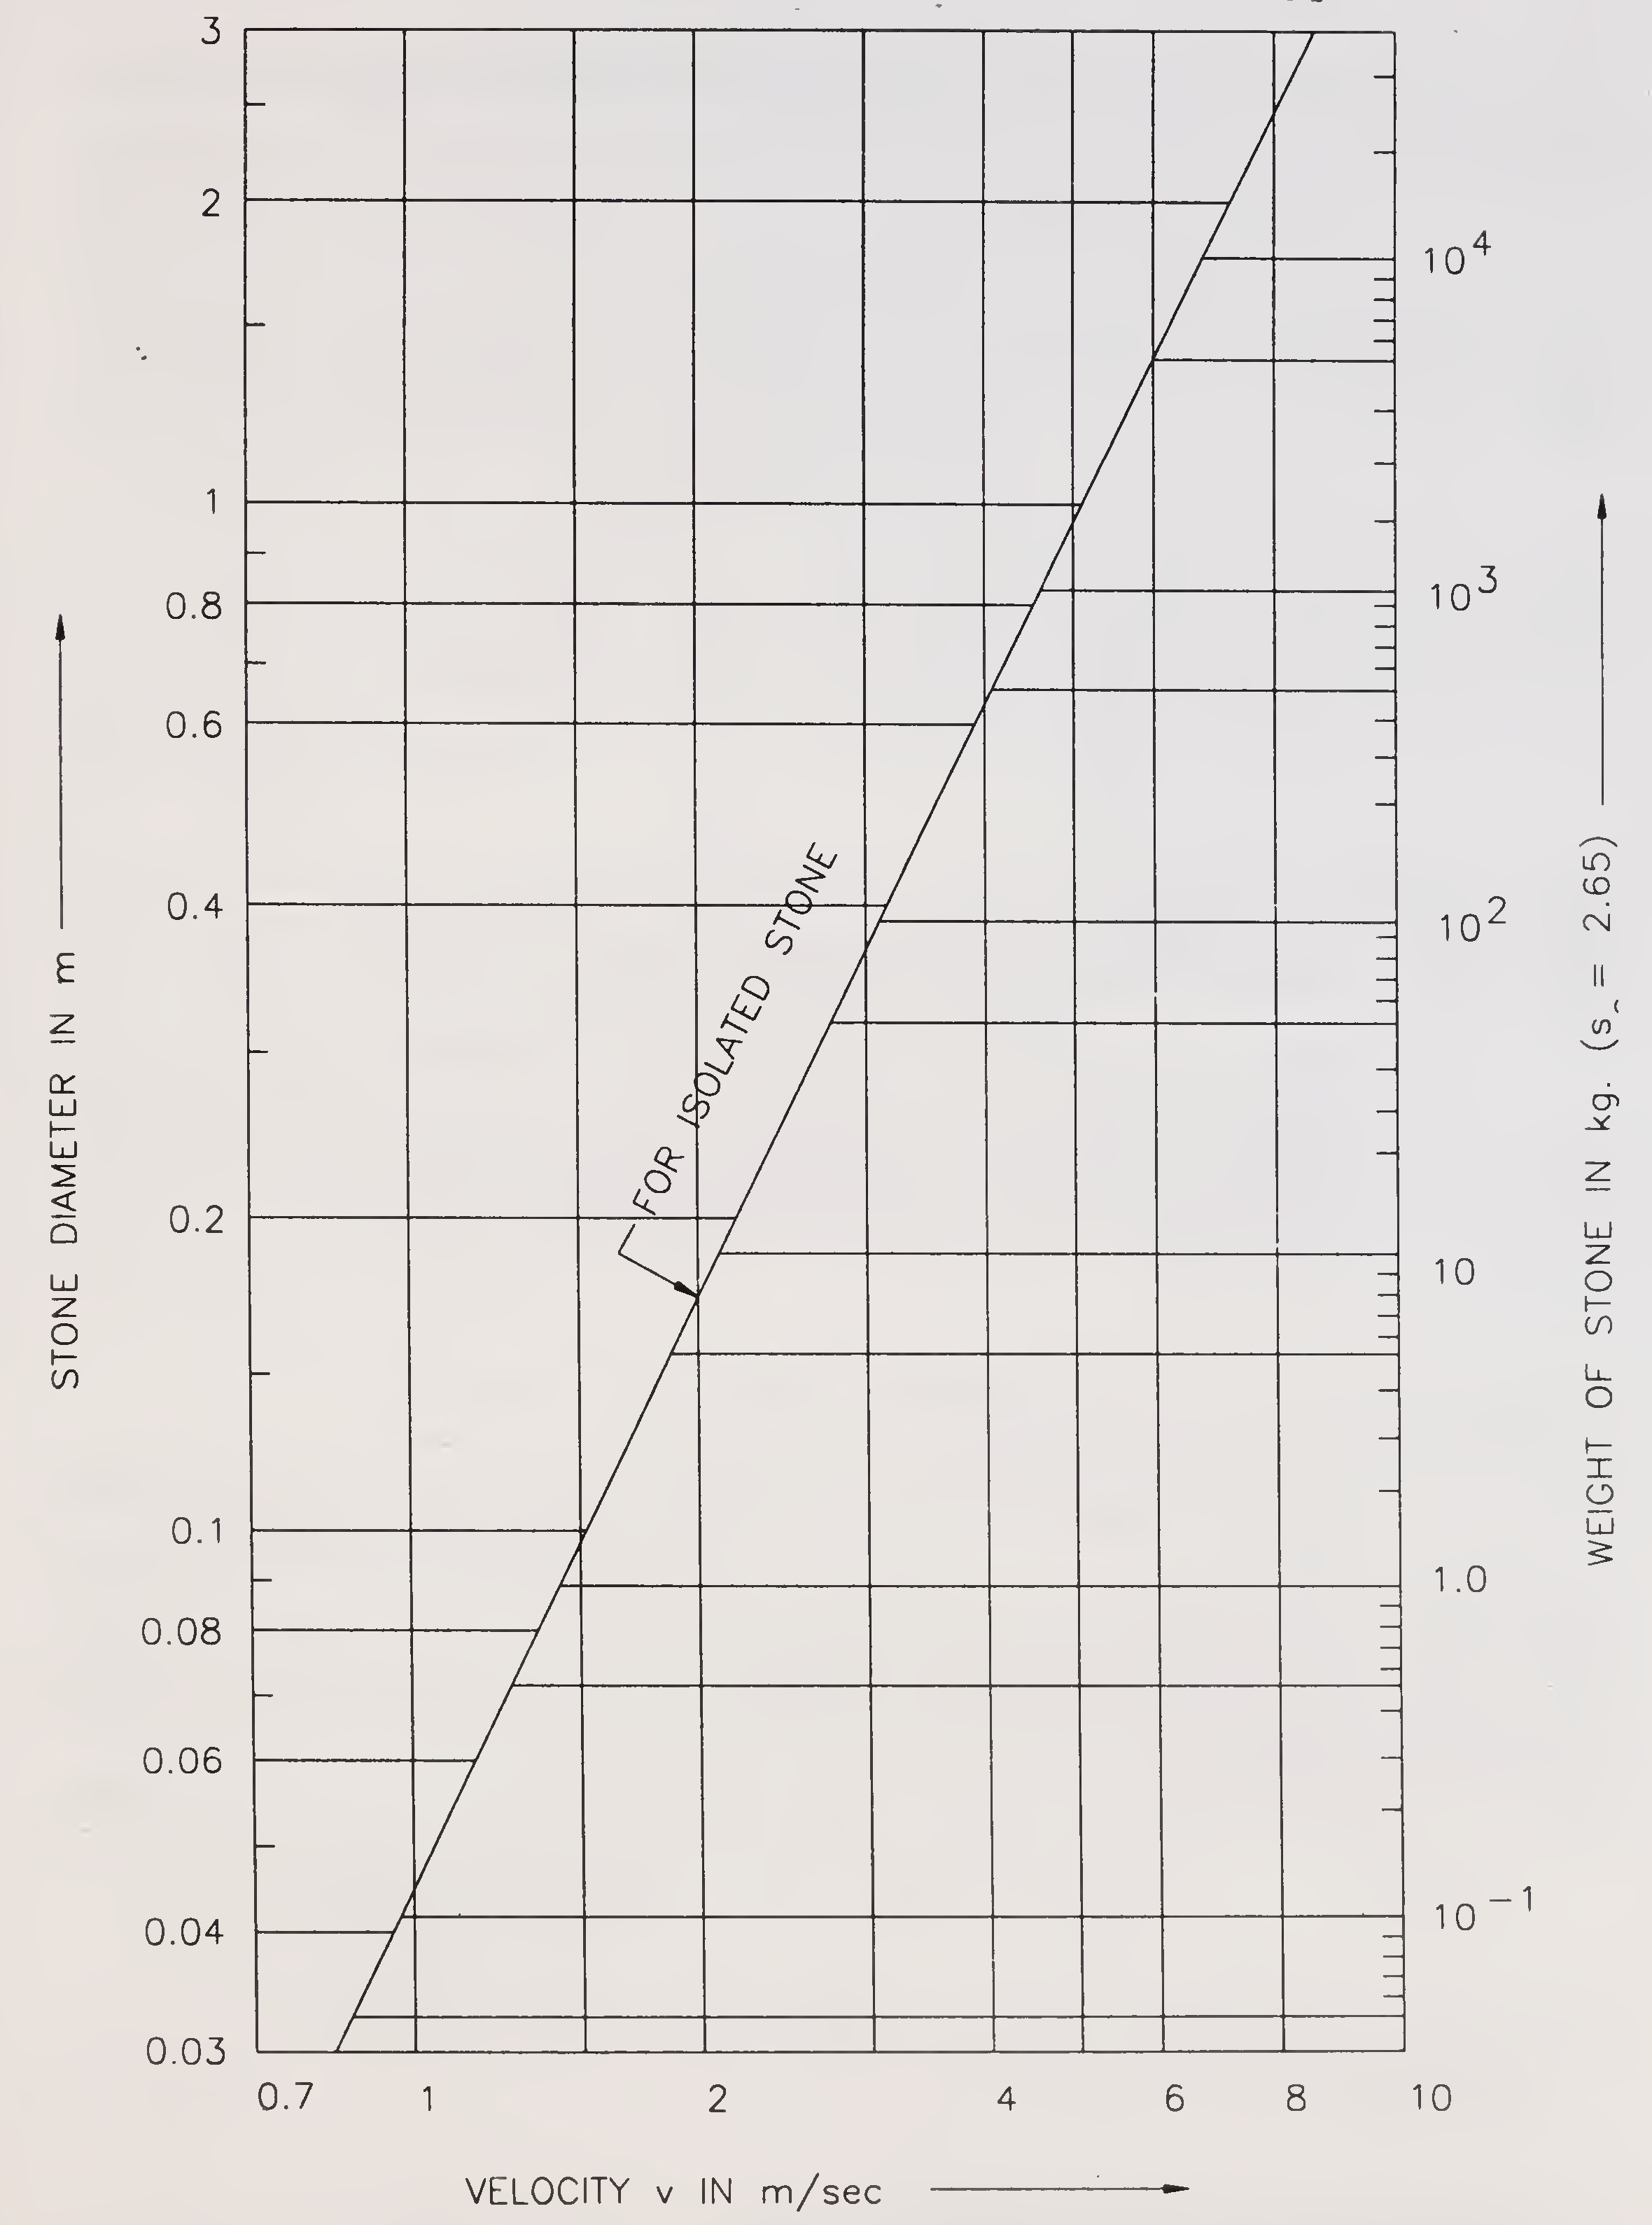 Fig. 5.8. Size of apron stone versus velocity (Para 5.3.7.2.)